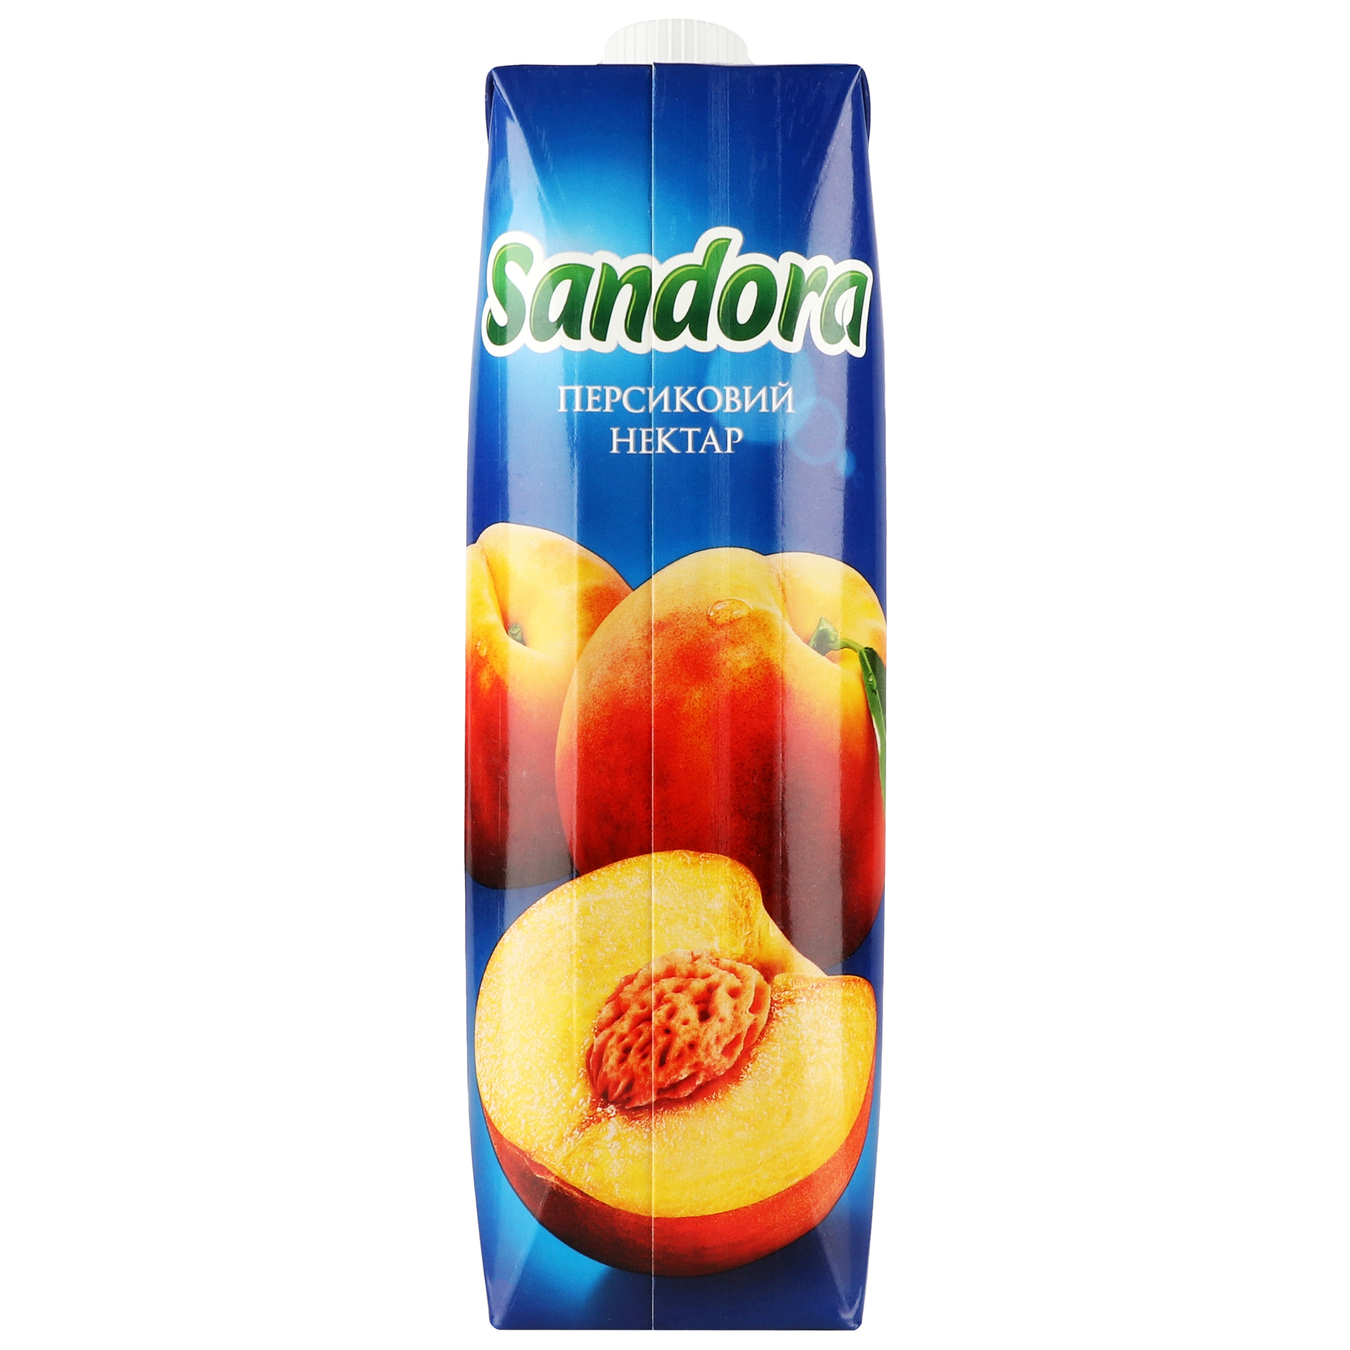 Sandora Peach Nectar 0,95l 4